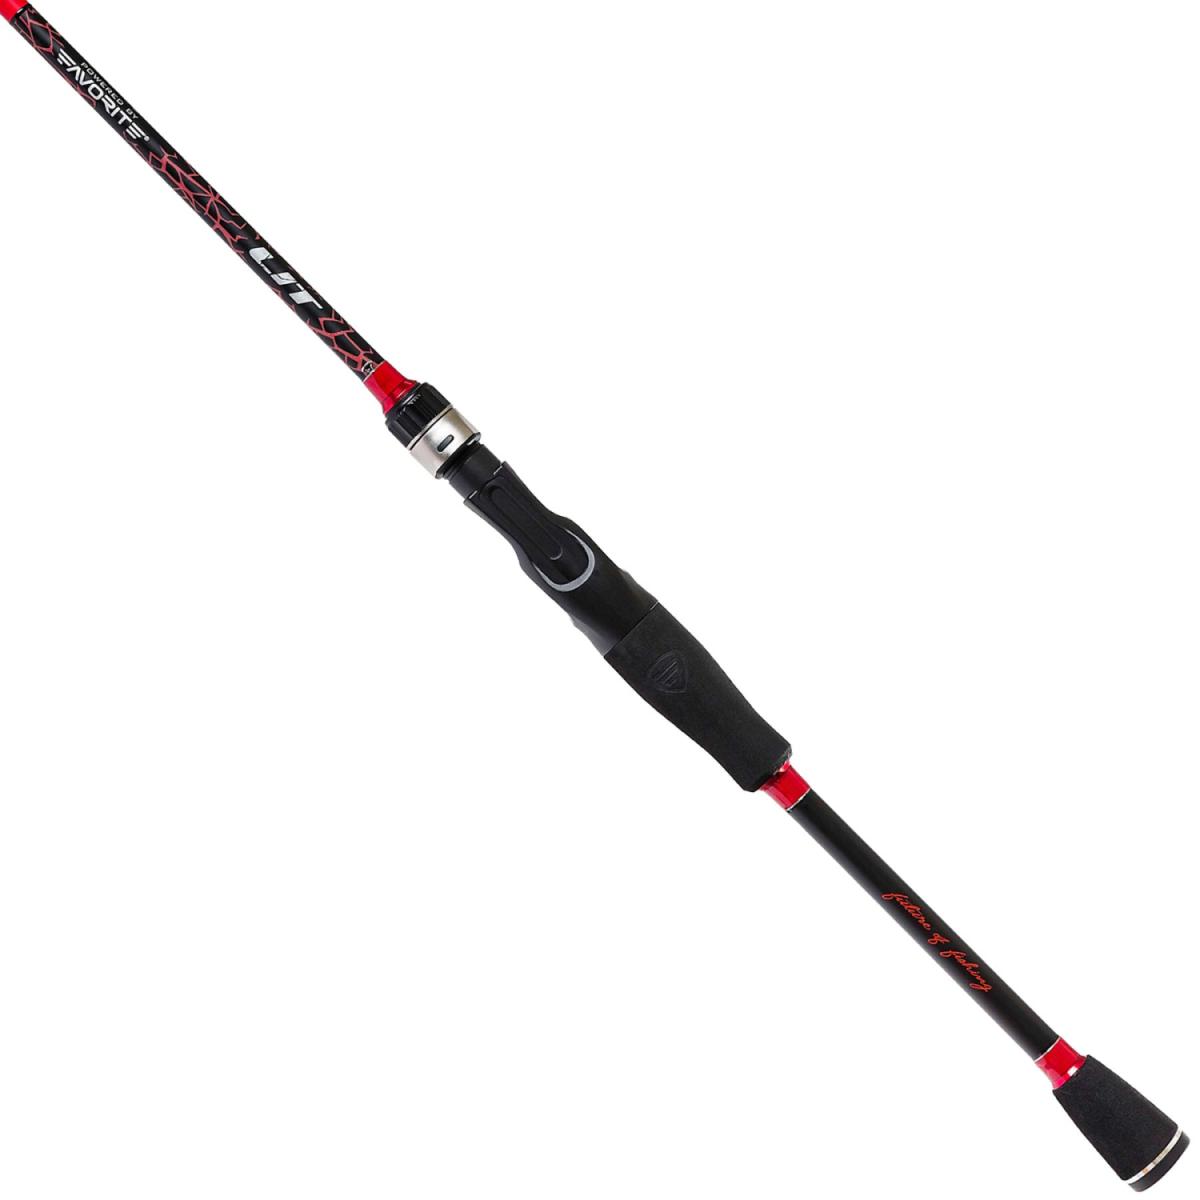 Favorite Fishing Phantom 7'3 Medium - Used Casting Rod